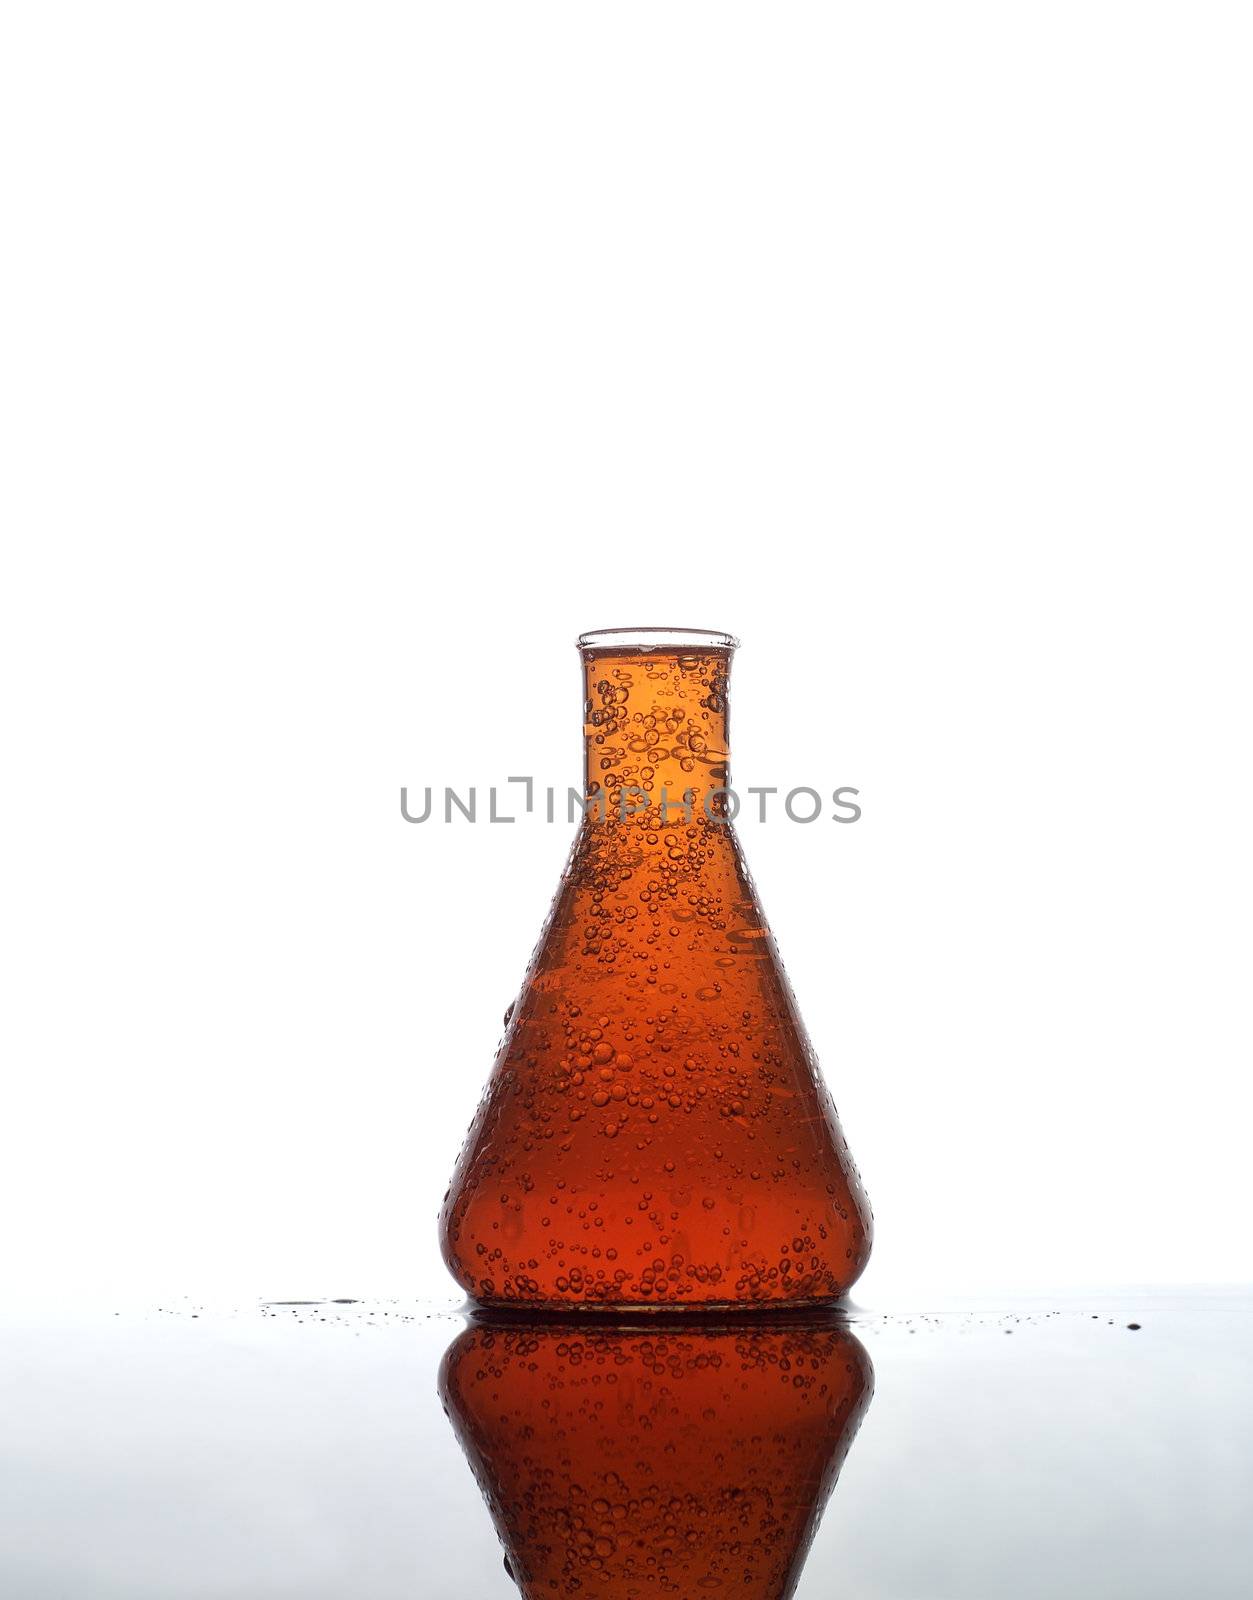 Laboratory Glass with orange liquid